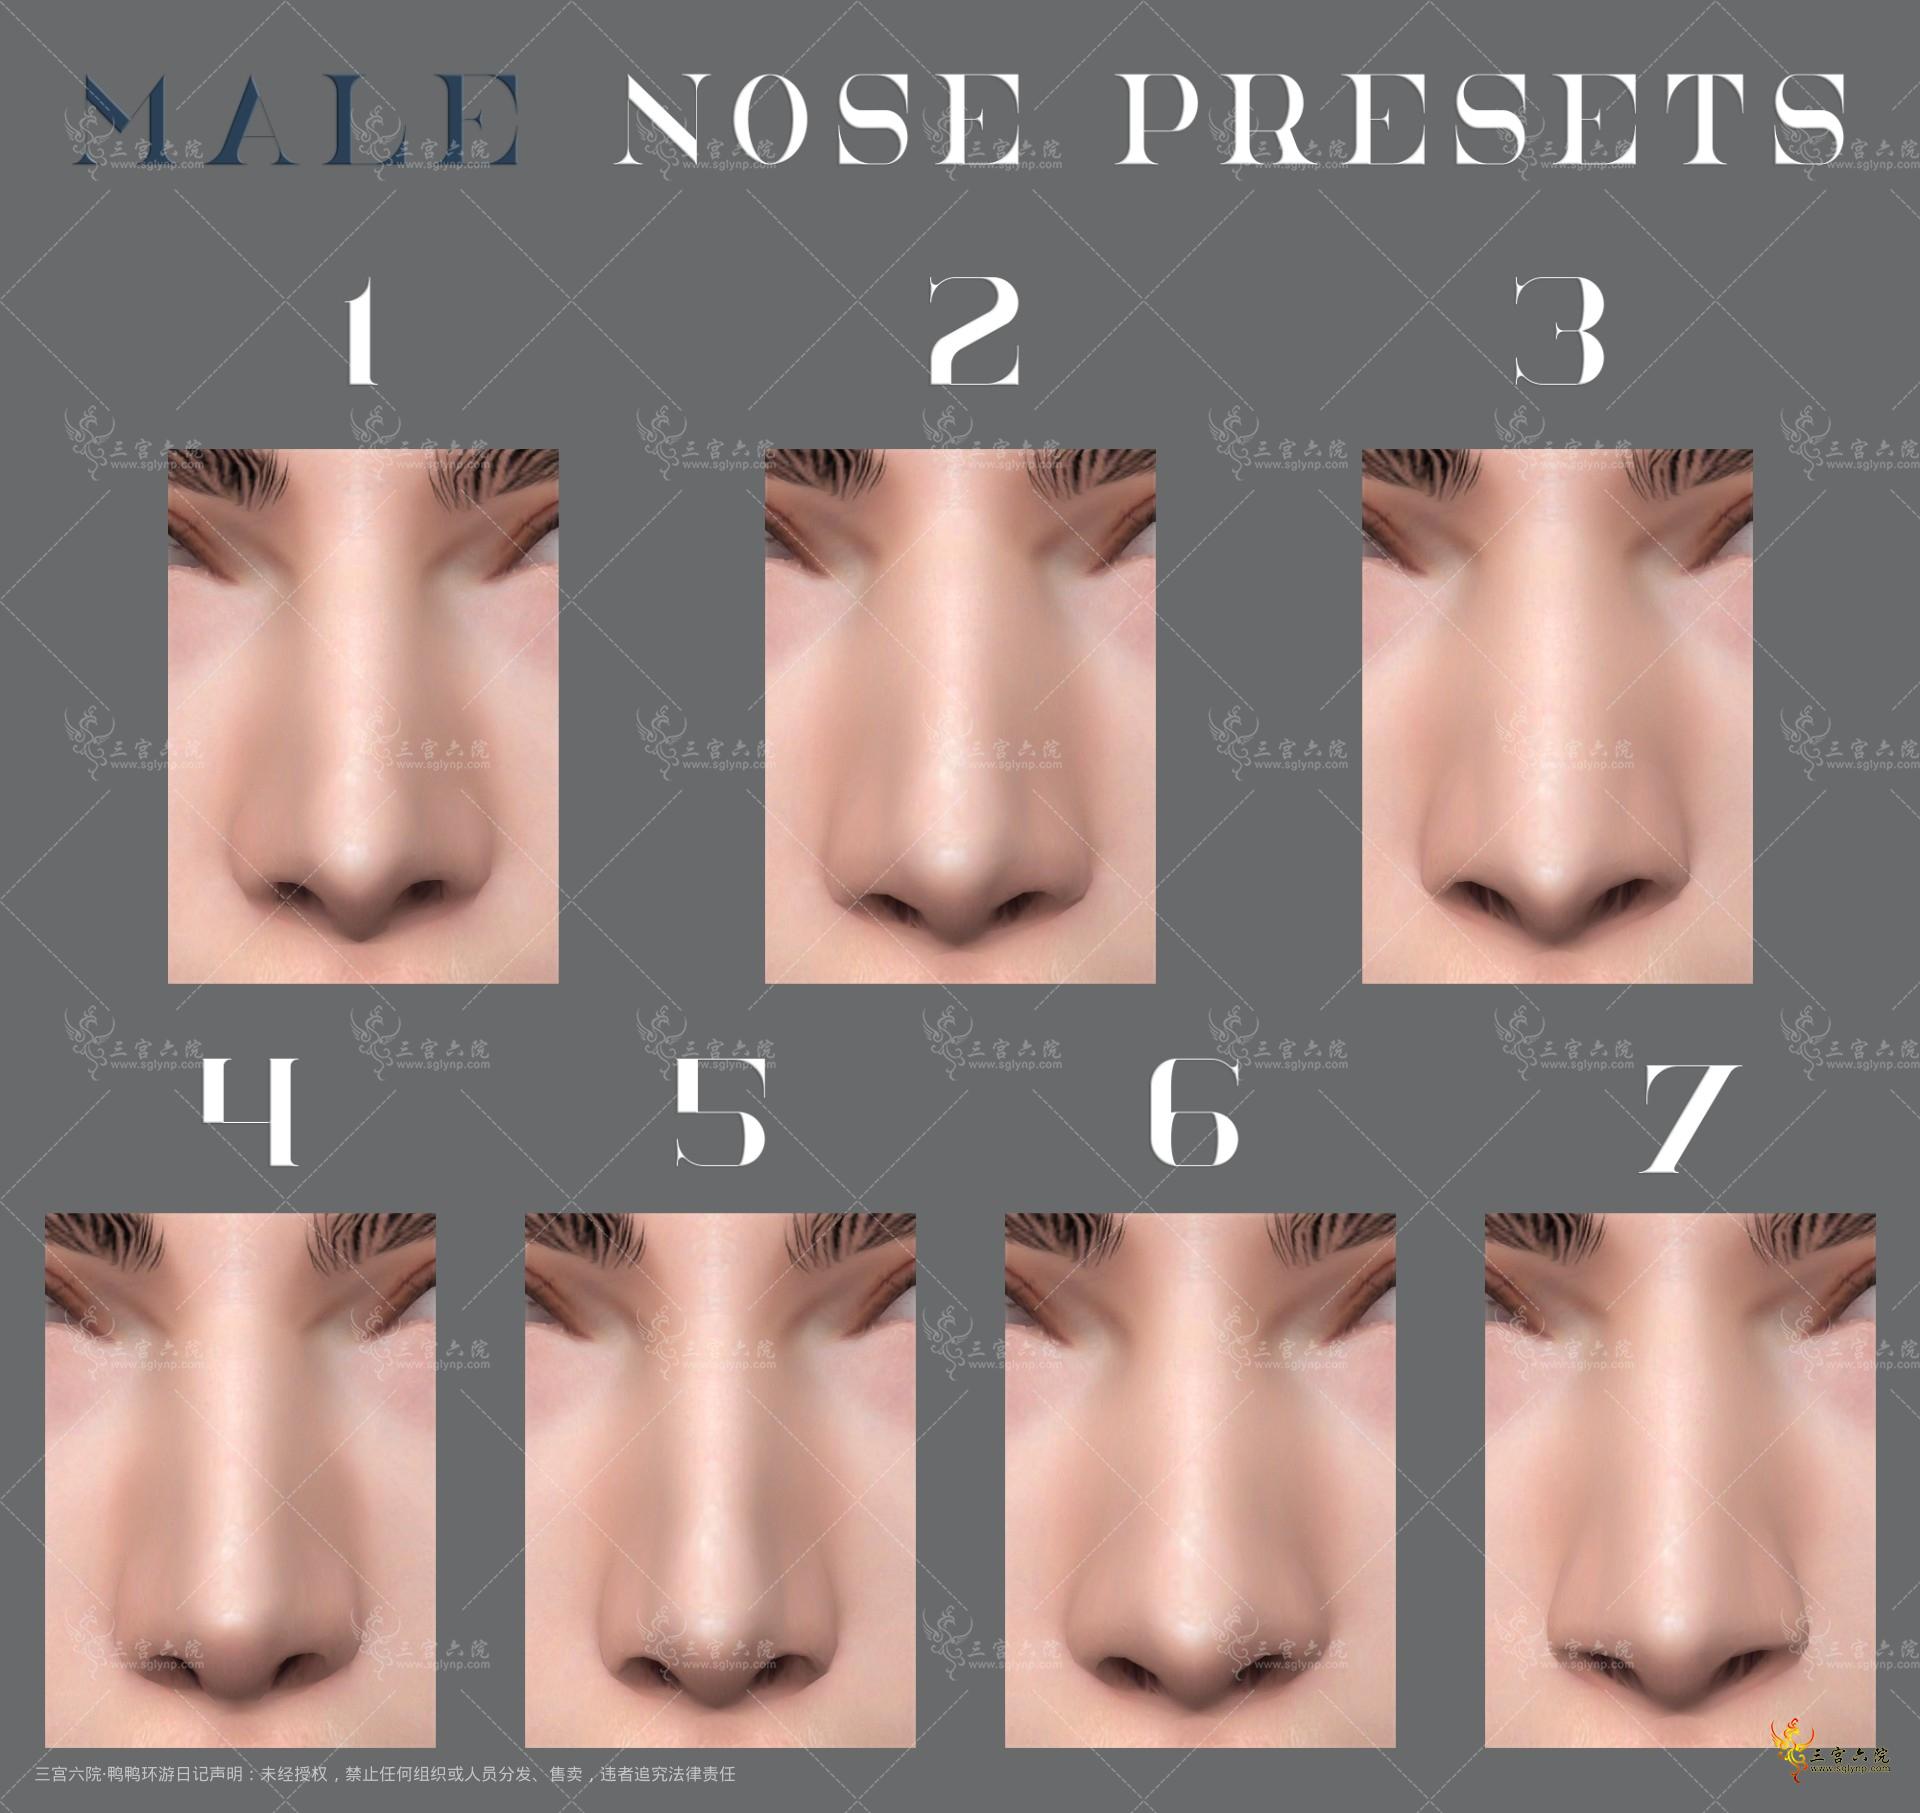 nose presets 1-7.png